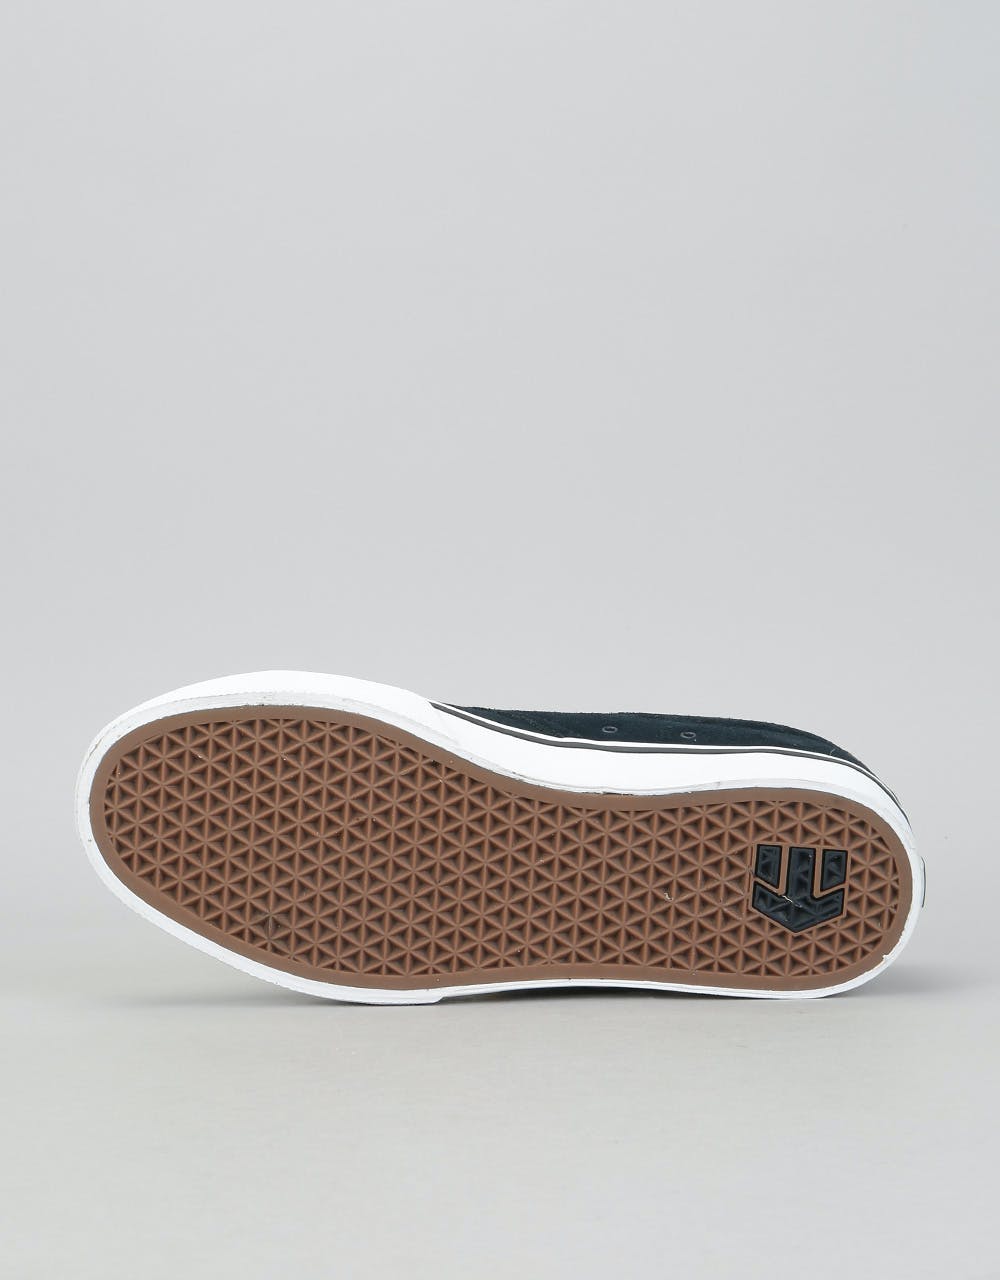 Etnies Jameson Vulc Skate Shoes - Navy/Brown/White